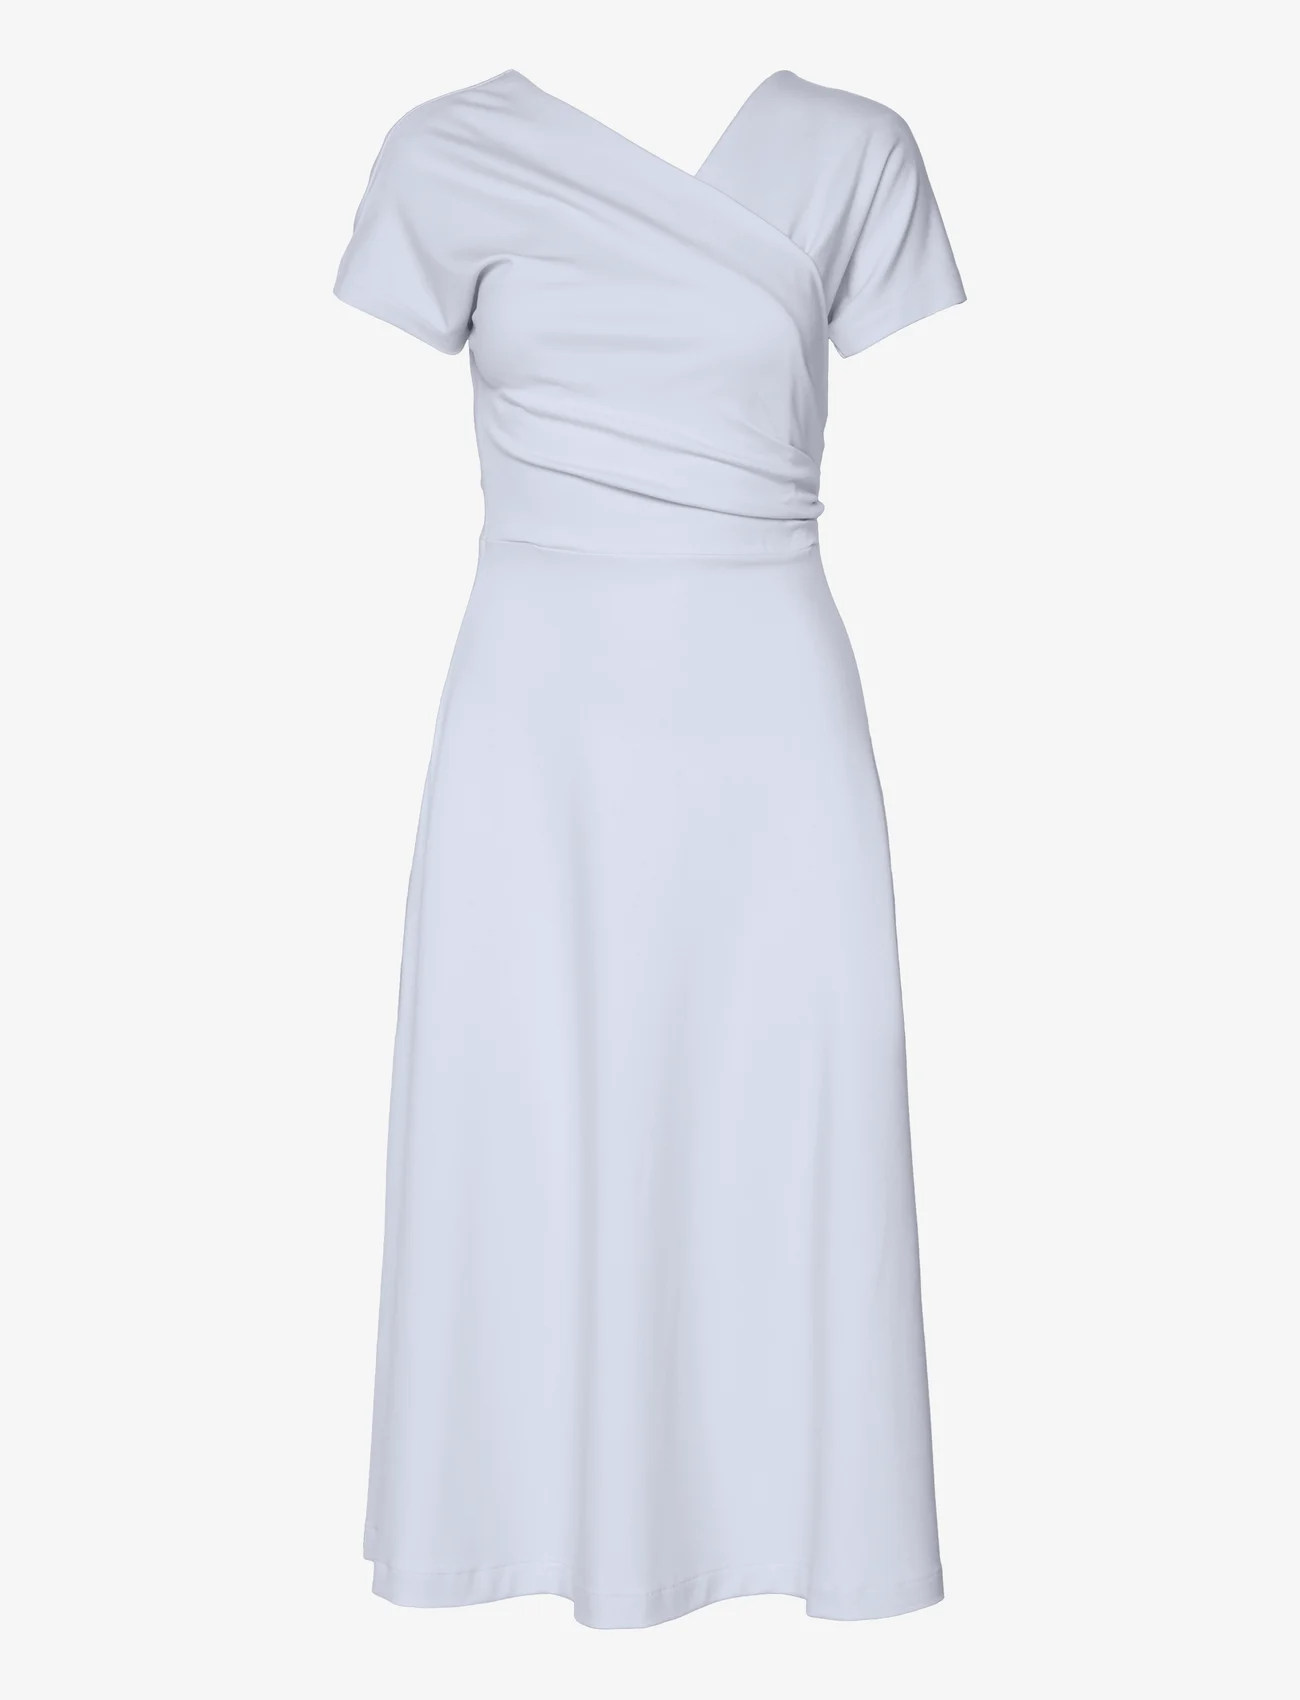 Residus - ANIS DRESS - summer dresses - pale blue - 0